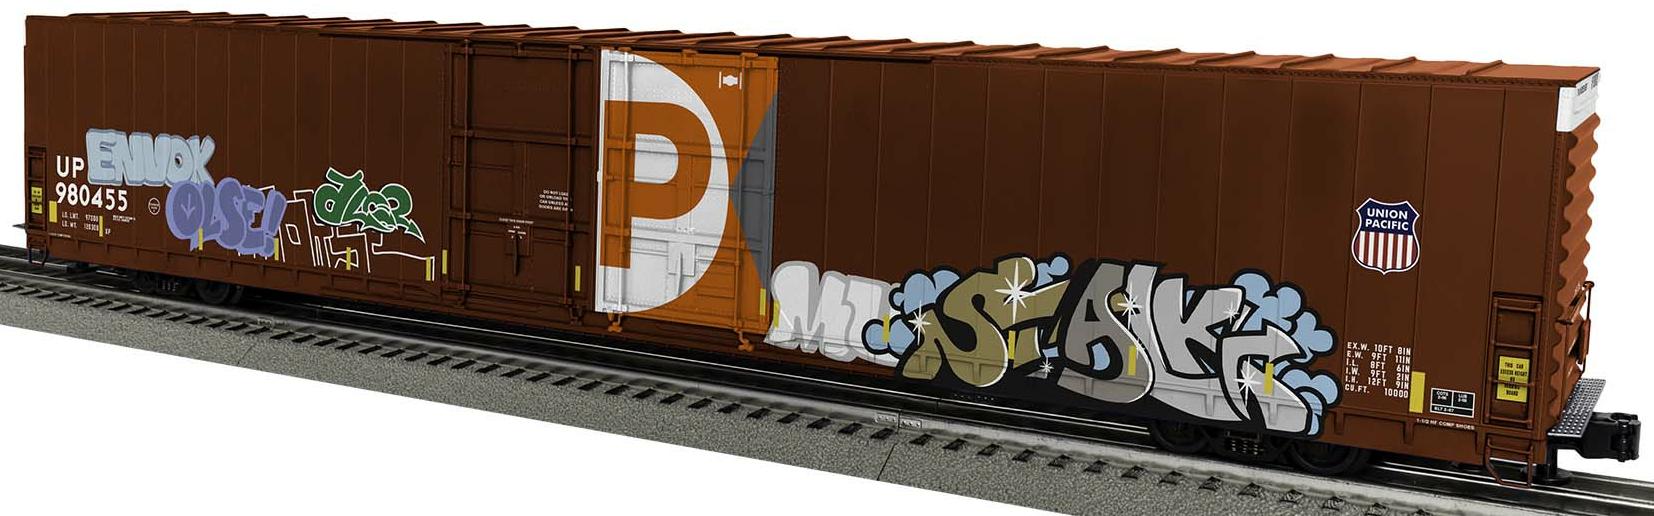 Union Pacific 86' 4 Door High Cube Boxcar w/graffiti #980455 image